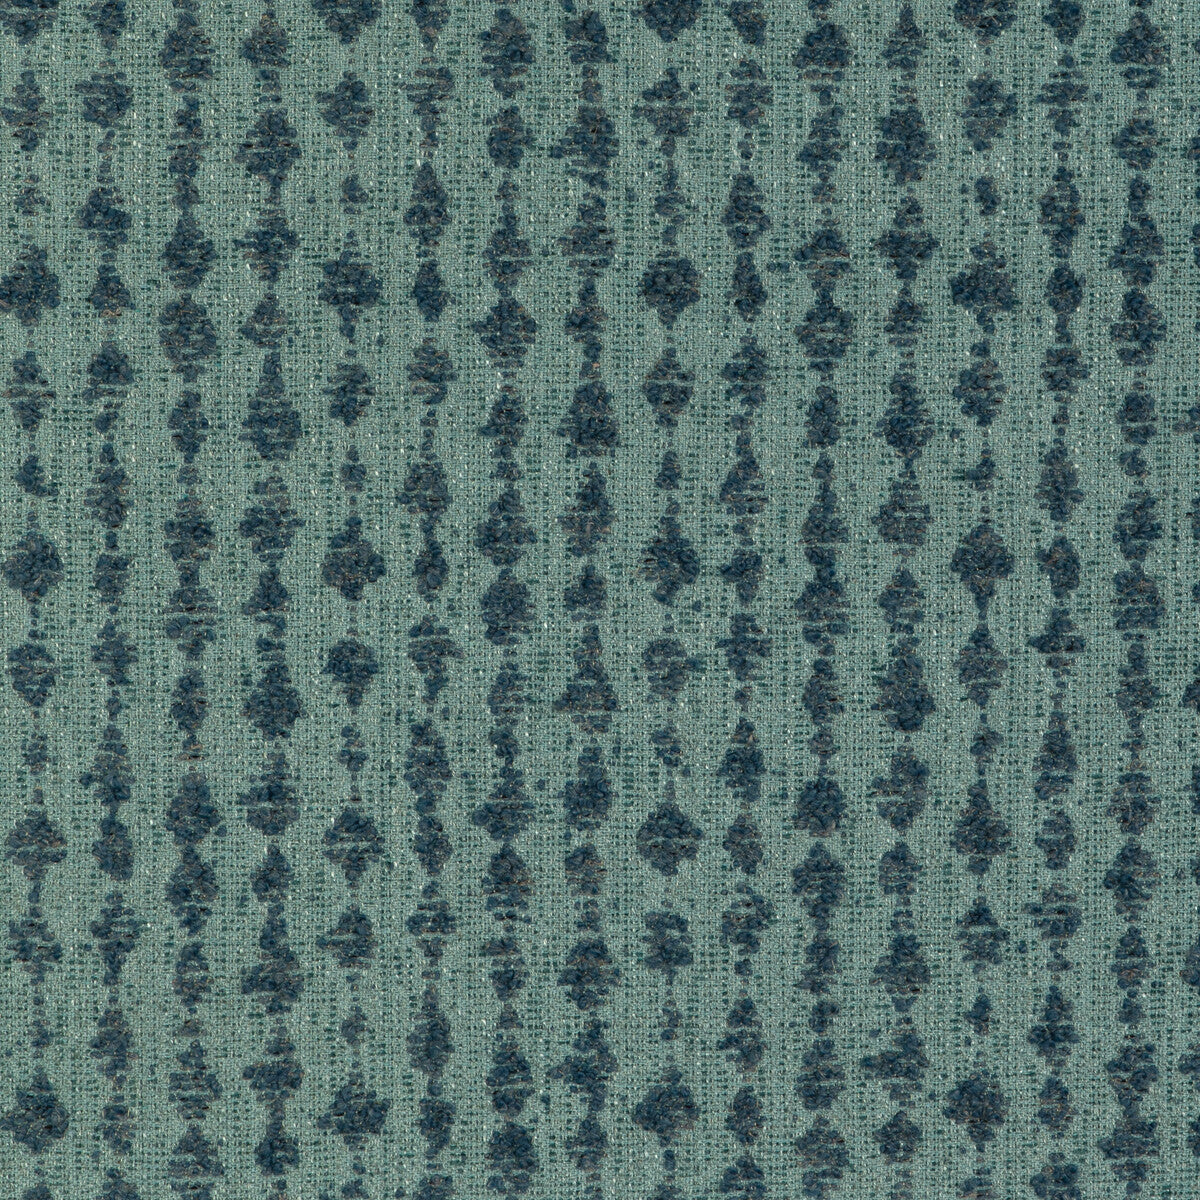 Serai fabric in sky color - pattern GWF-3795.355.0 - by Lee Jofa Modern in the Kelly Wearstler VIII collection